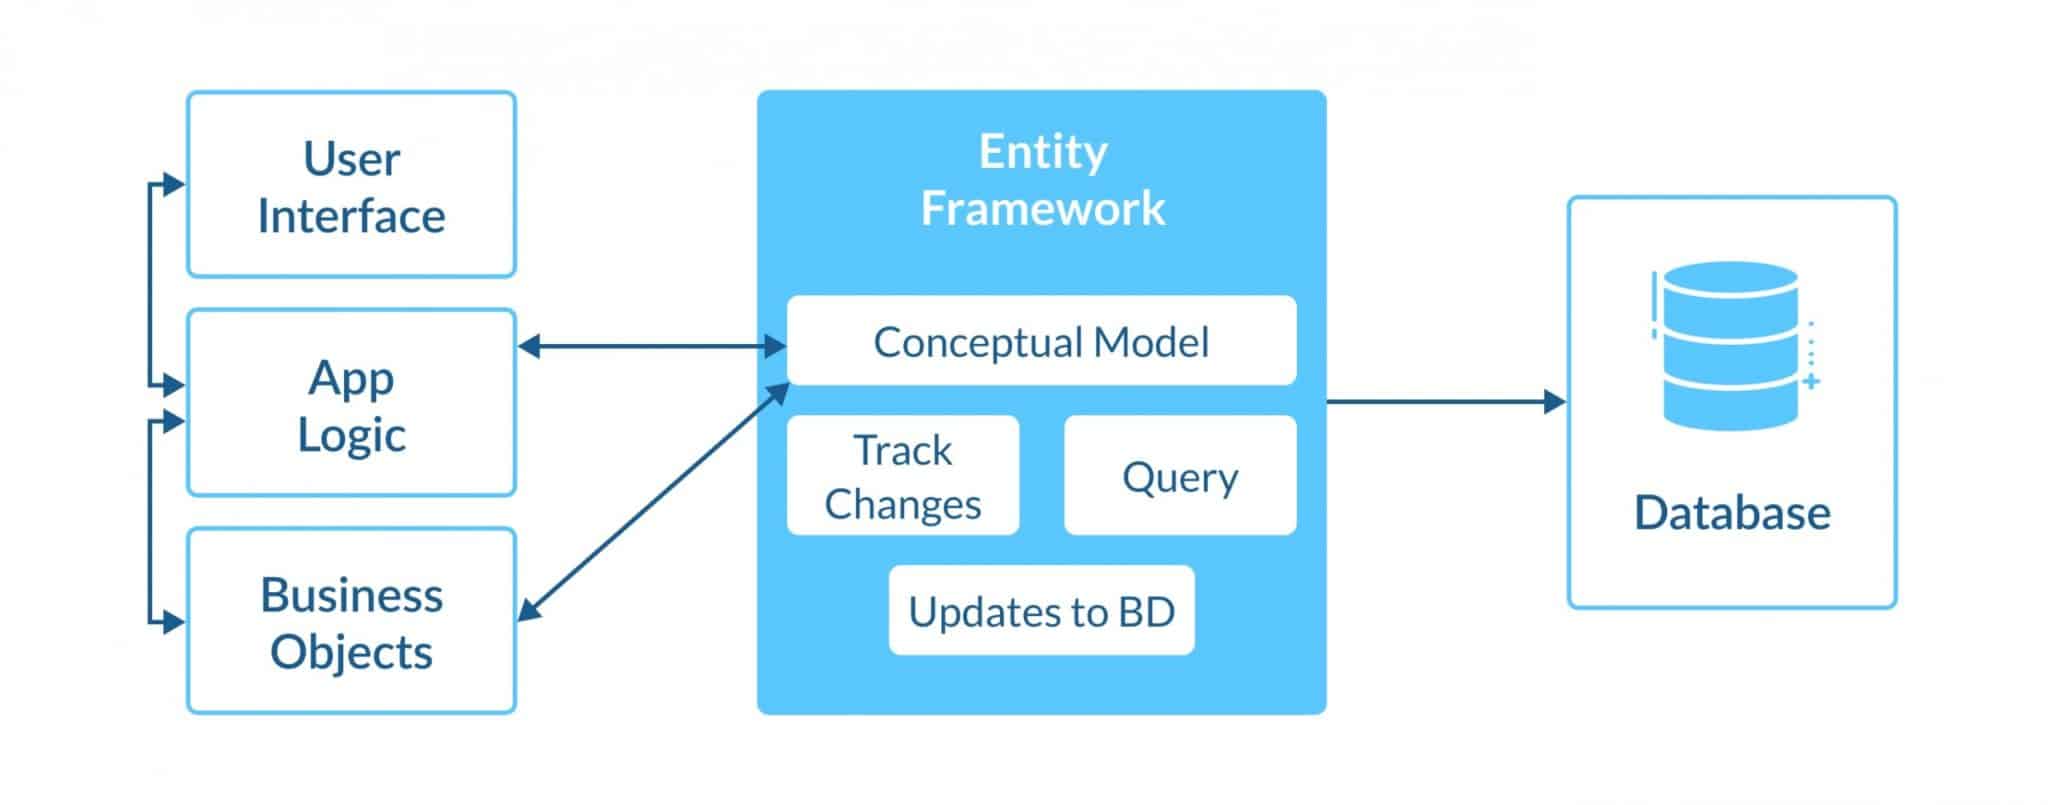 How does entity framework work?